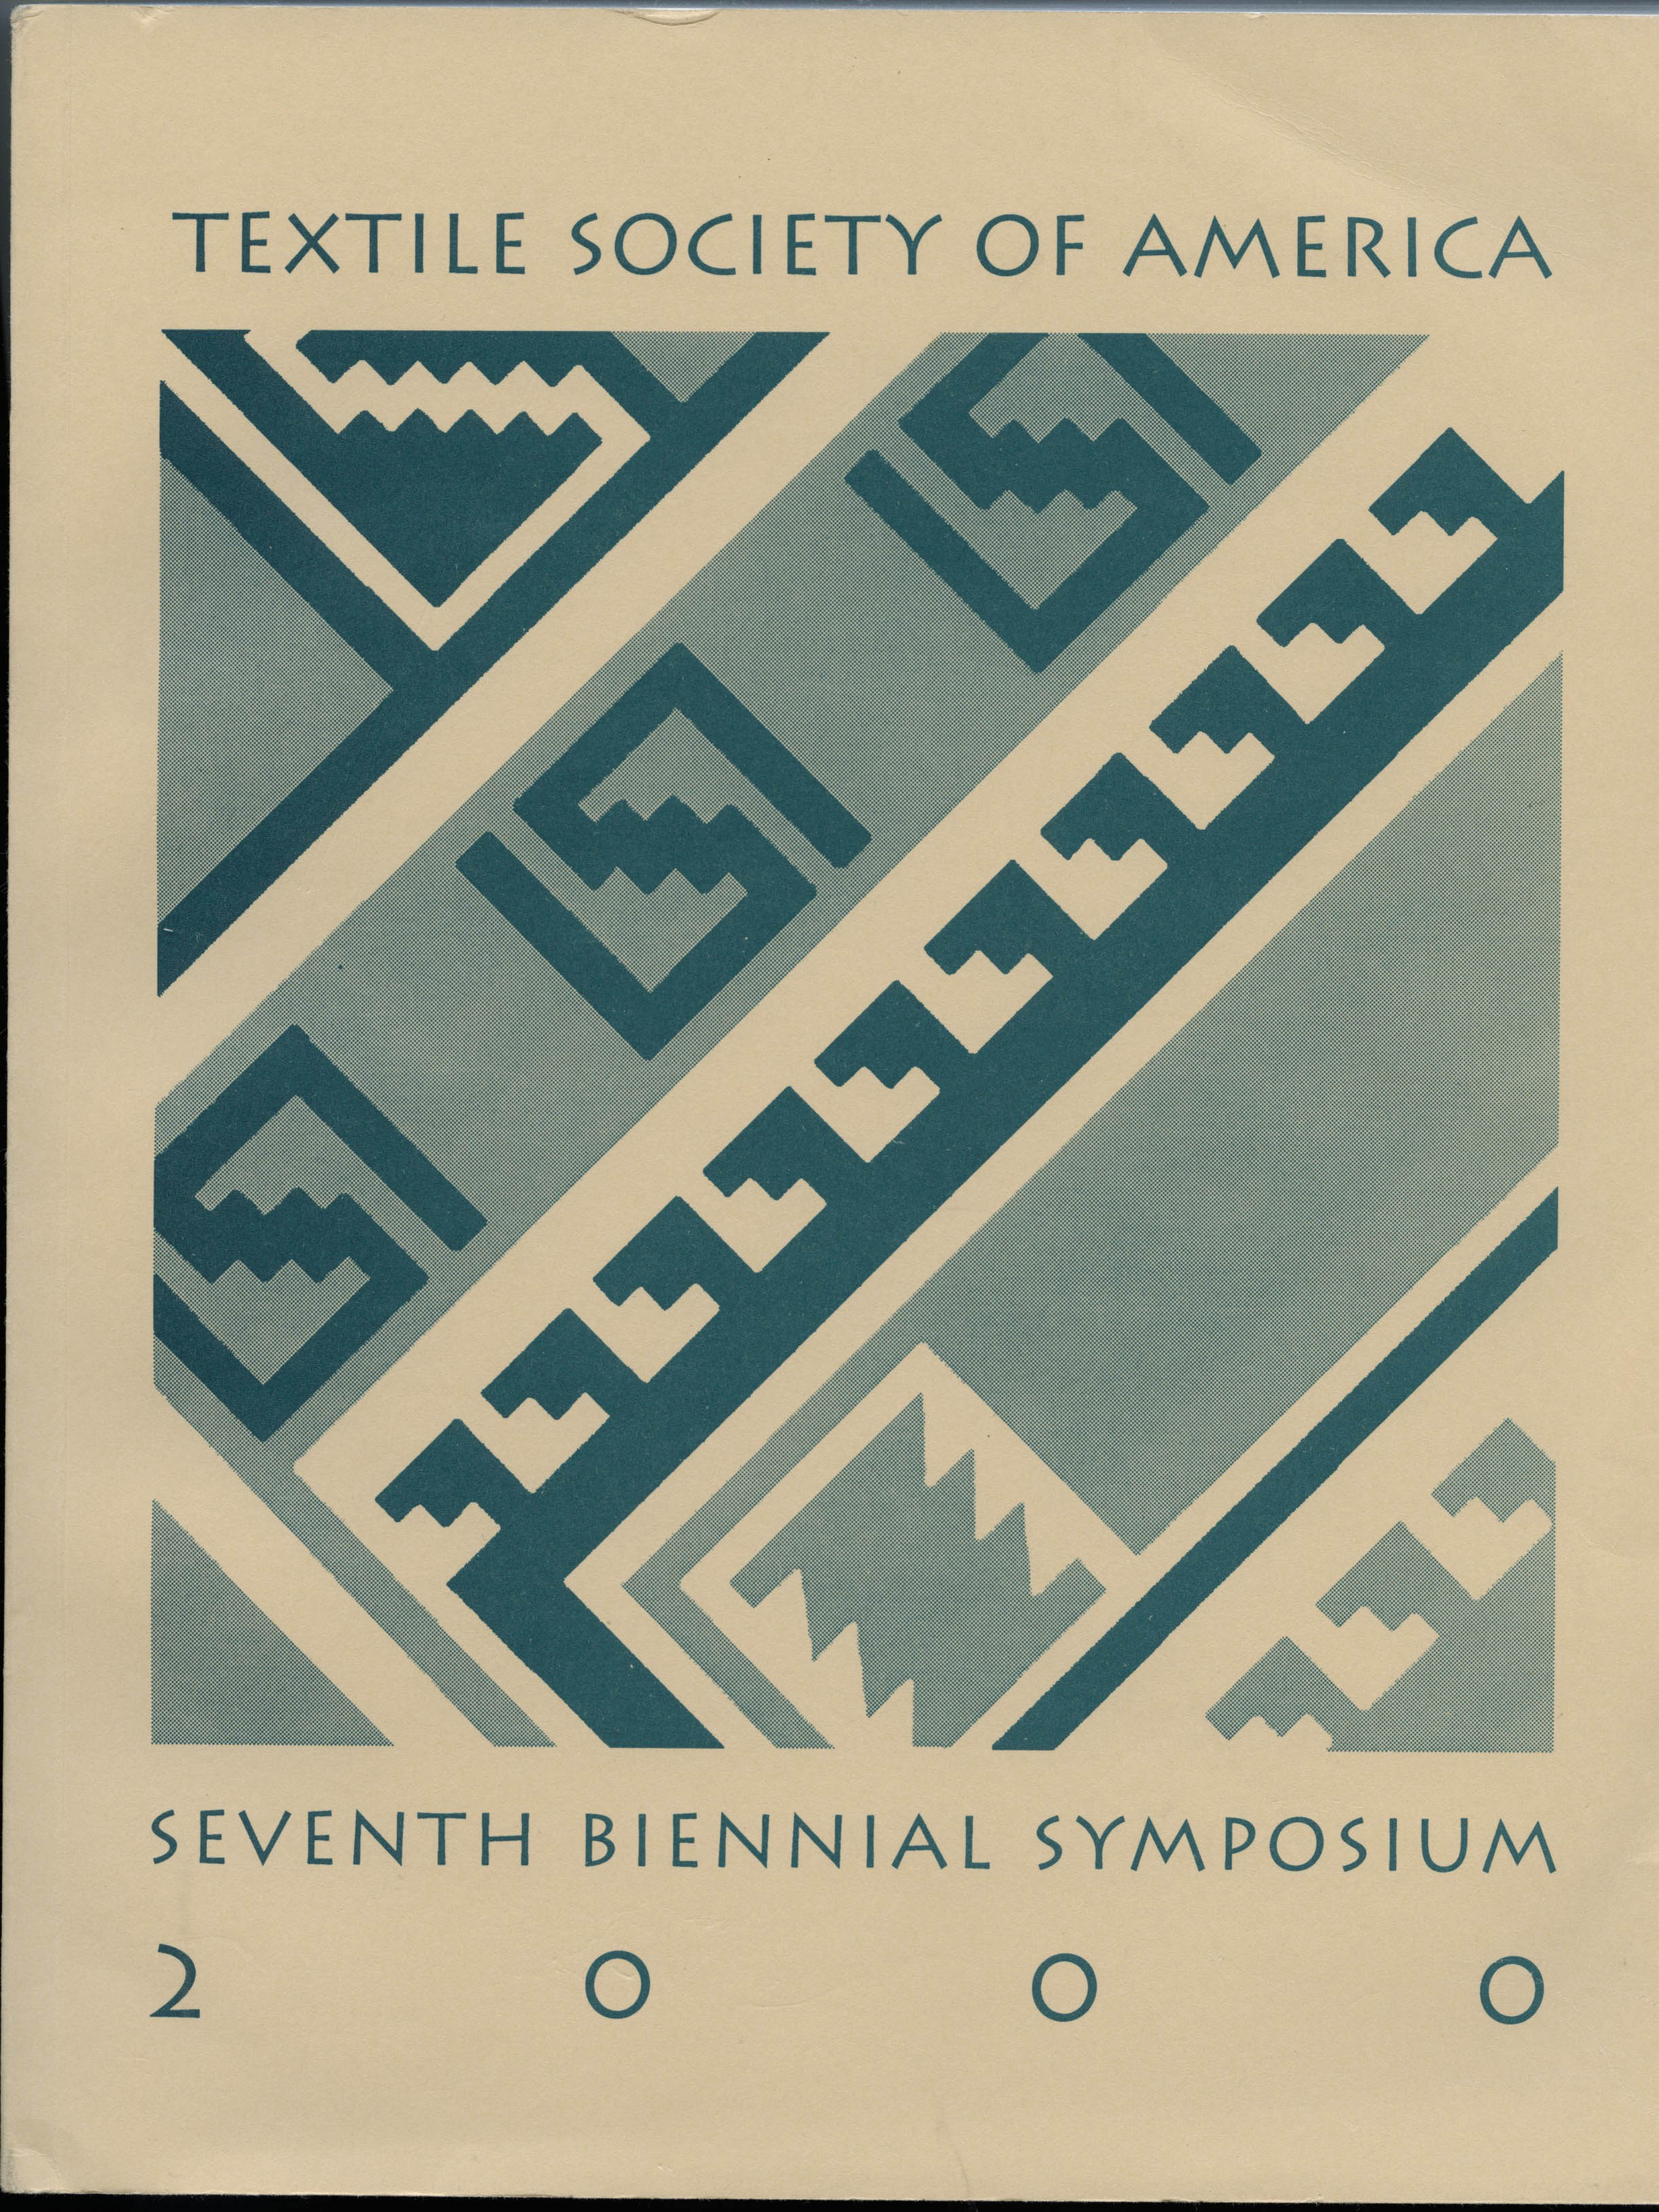 Textile Society of America Seventh Biennial Symposium, 2000.